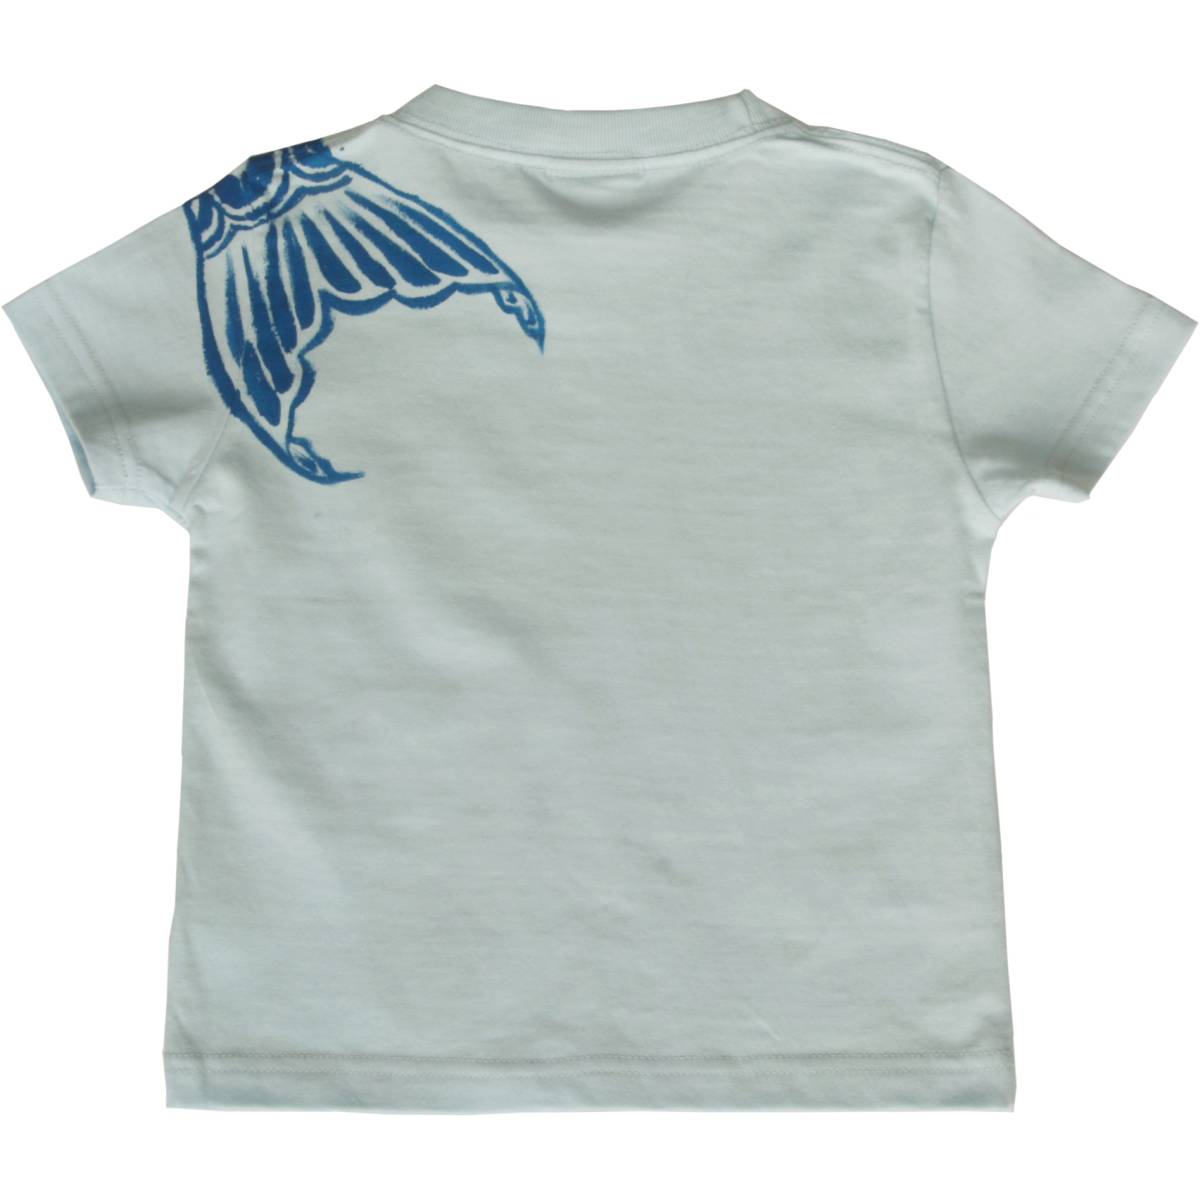  child clothes Kids T-shirt 140 size light blue blue koinobori pattern T-shirt hand made hand .. T-shirt peace pattern .. thing day man ..5 month 